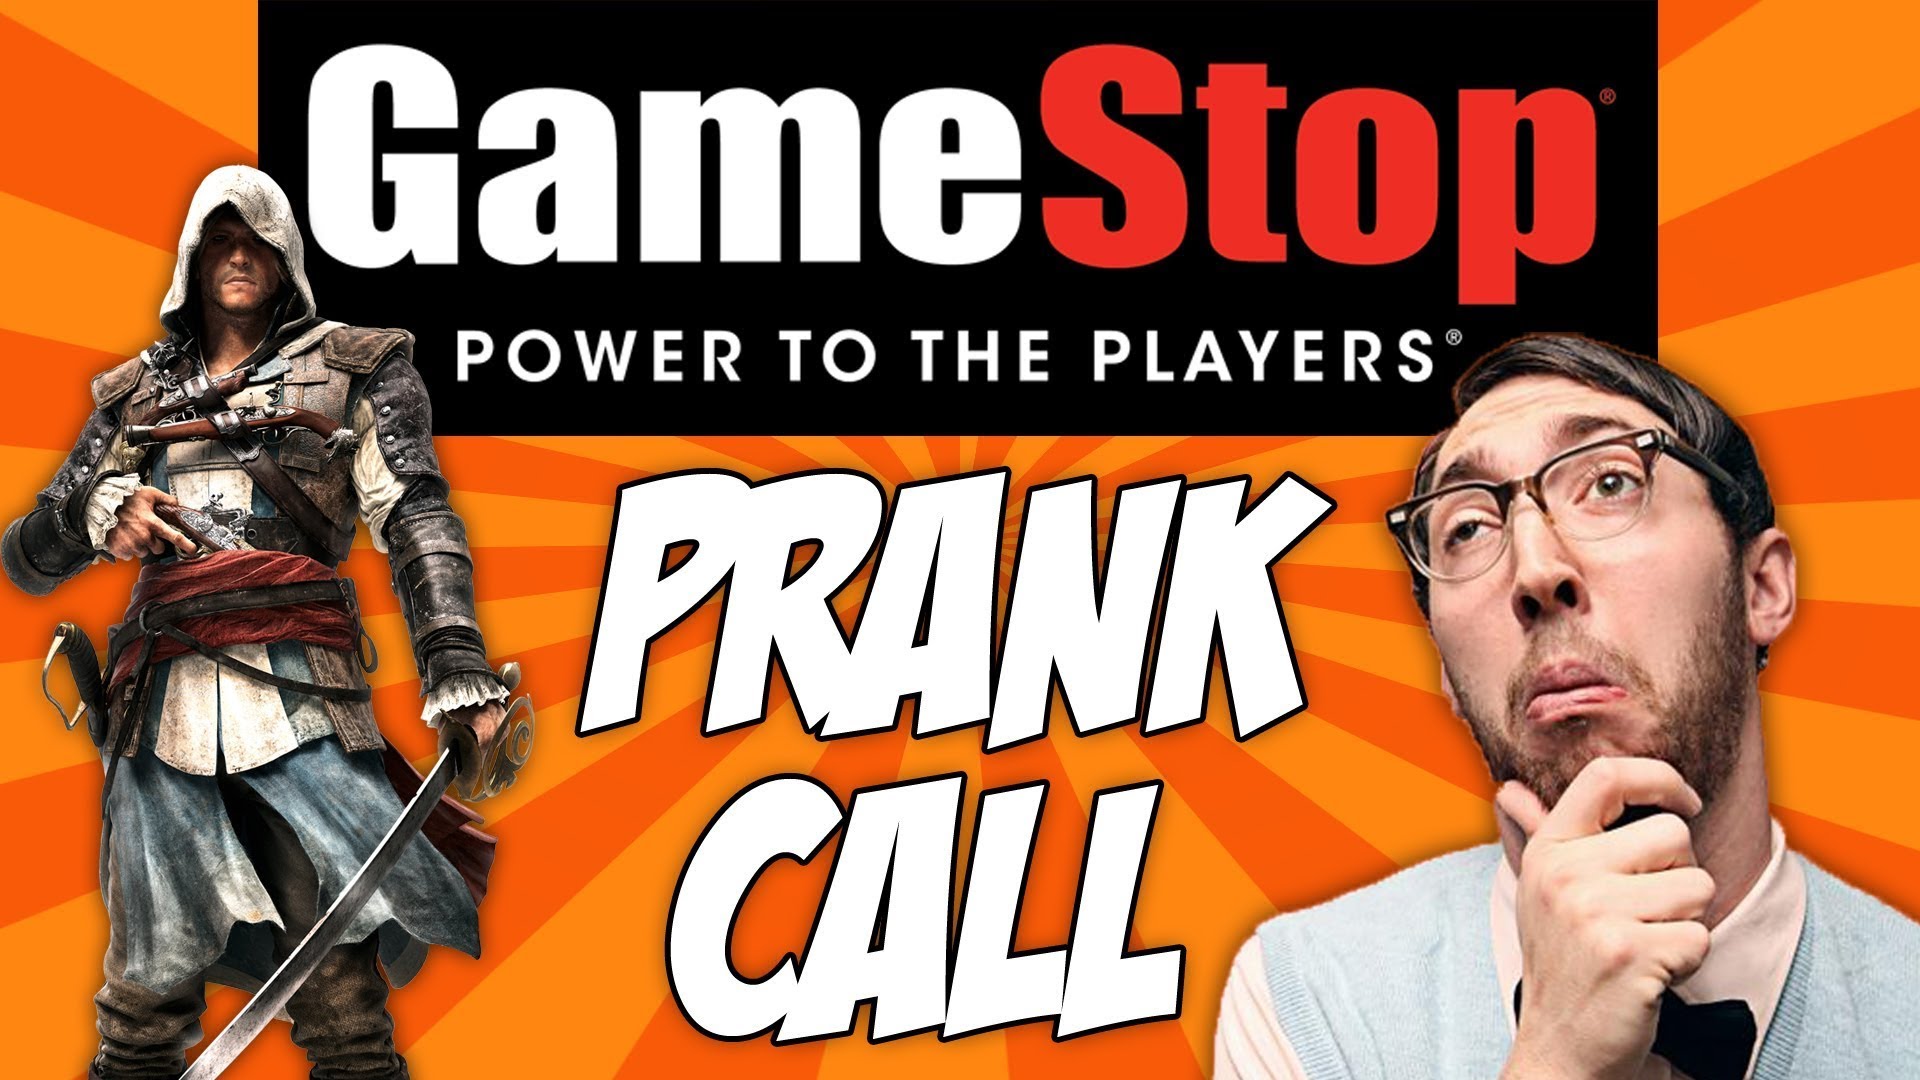 308047233 funny prank calls to gamestop employees